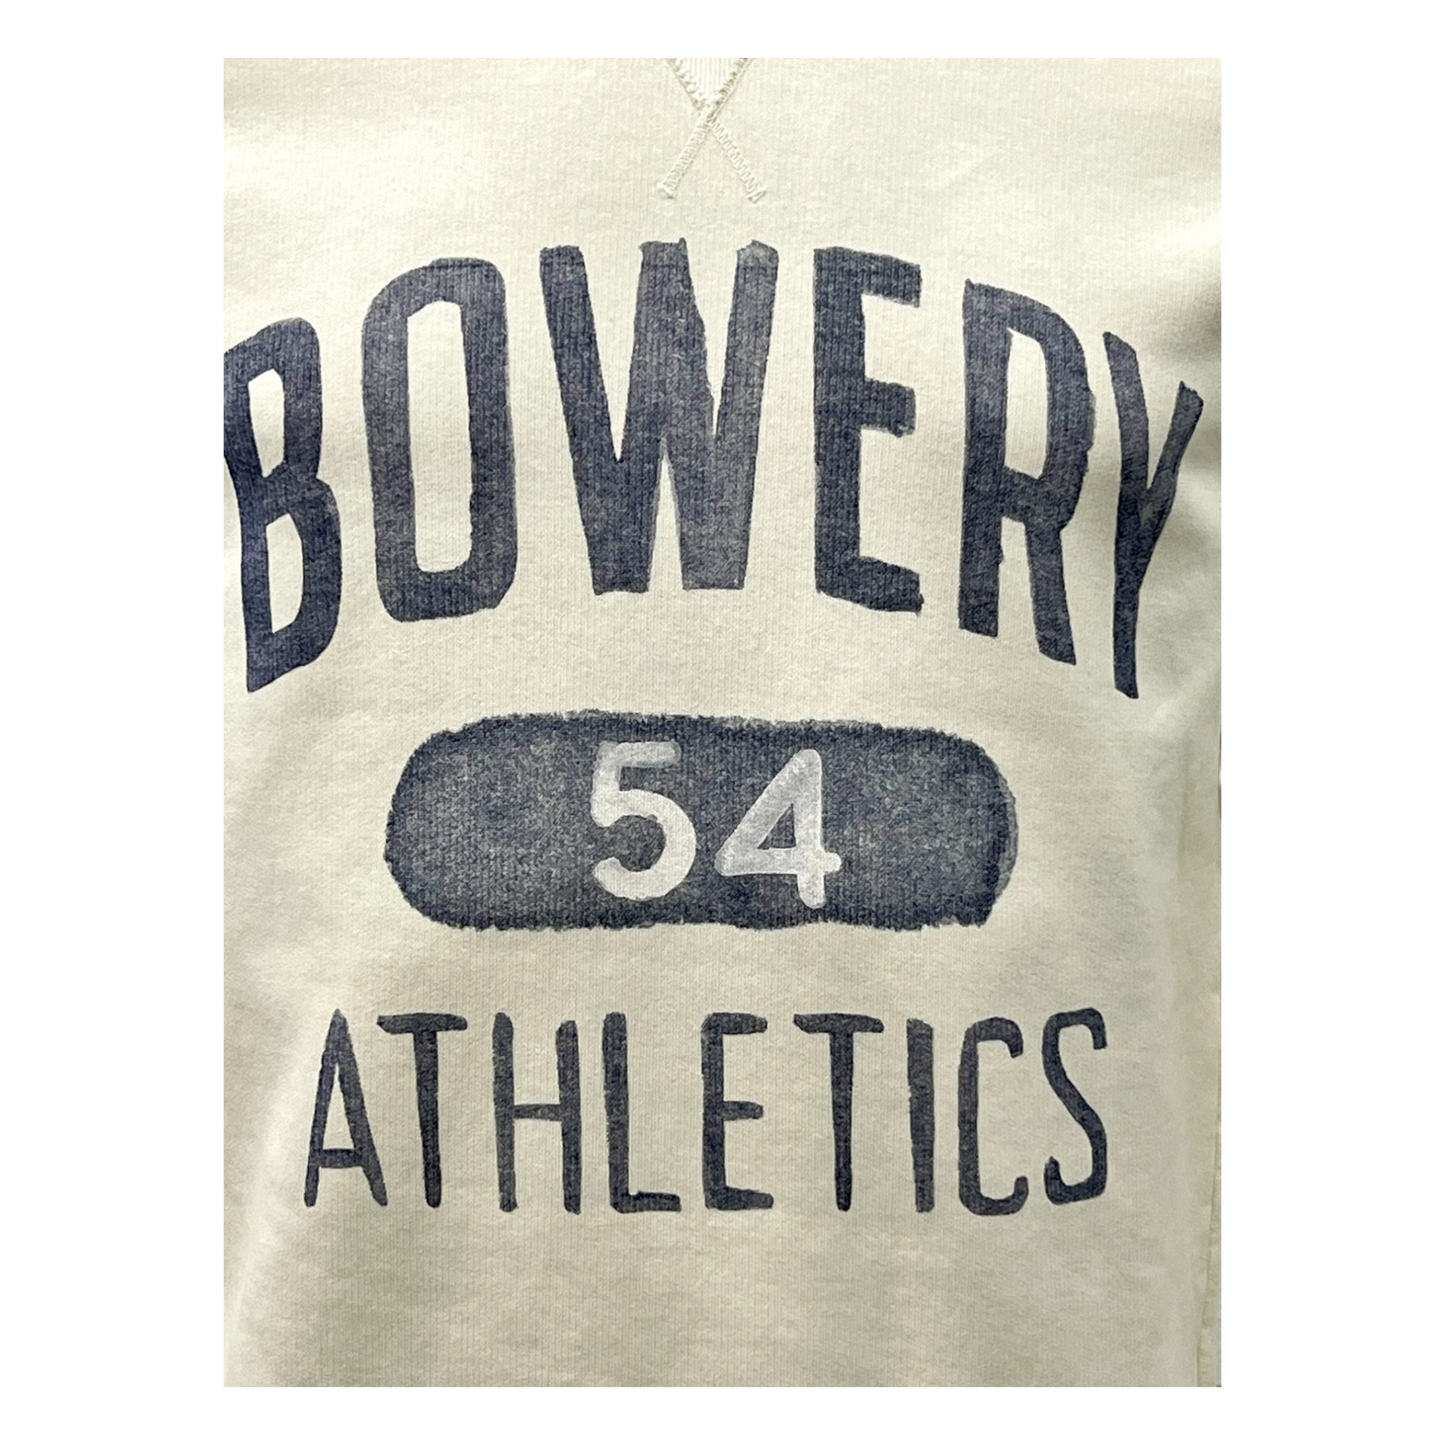 Bowery NYC,Sweatshirt,Bowery NYC, Athletics Sweatshirt, ecru,UNIT Hamburg